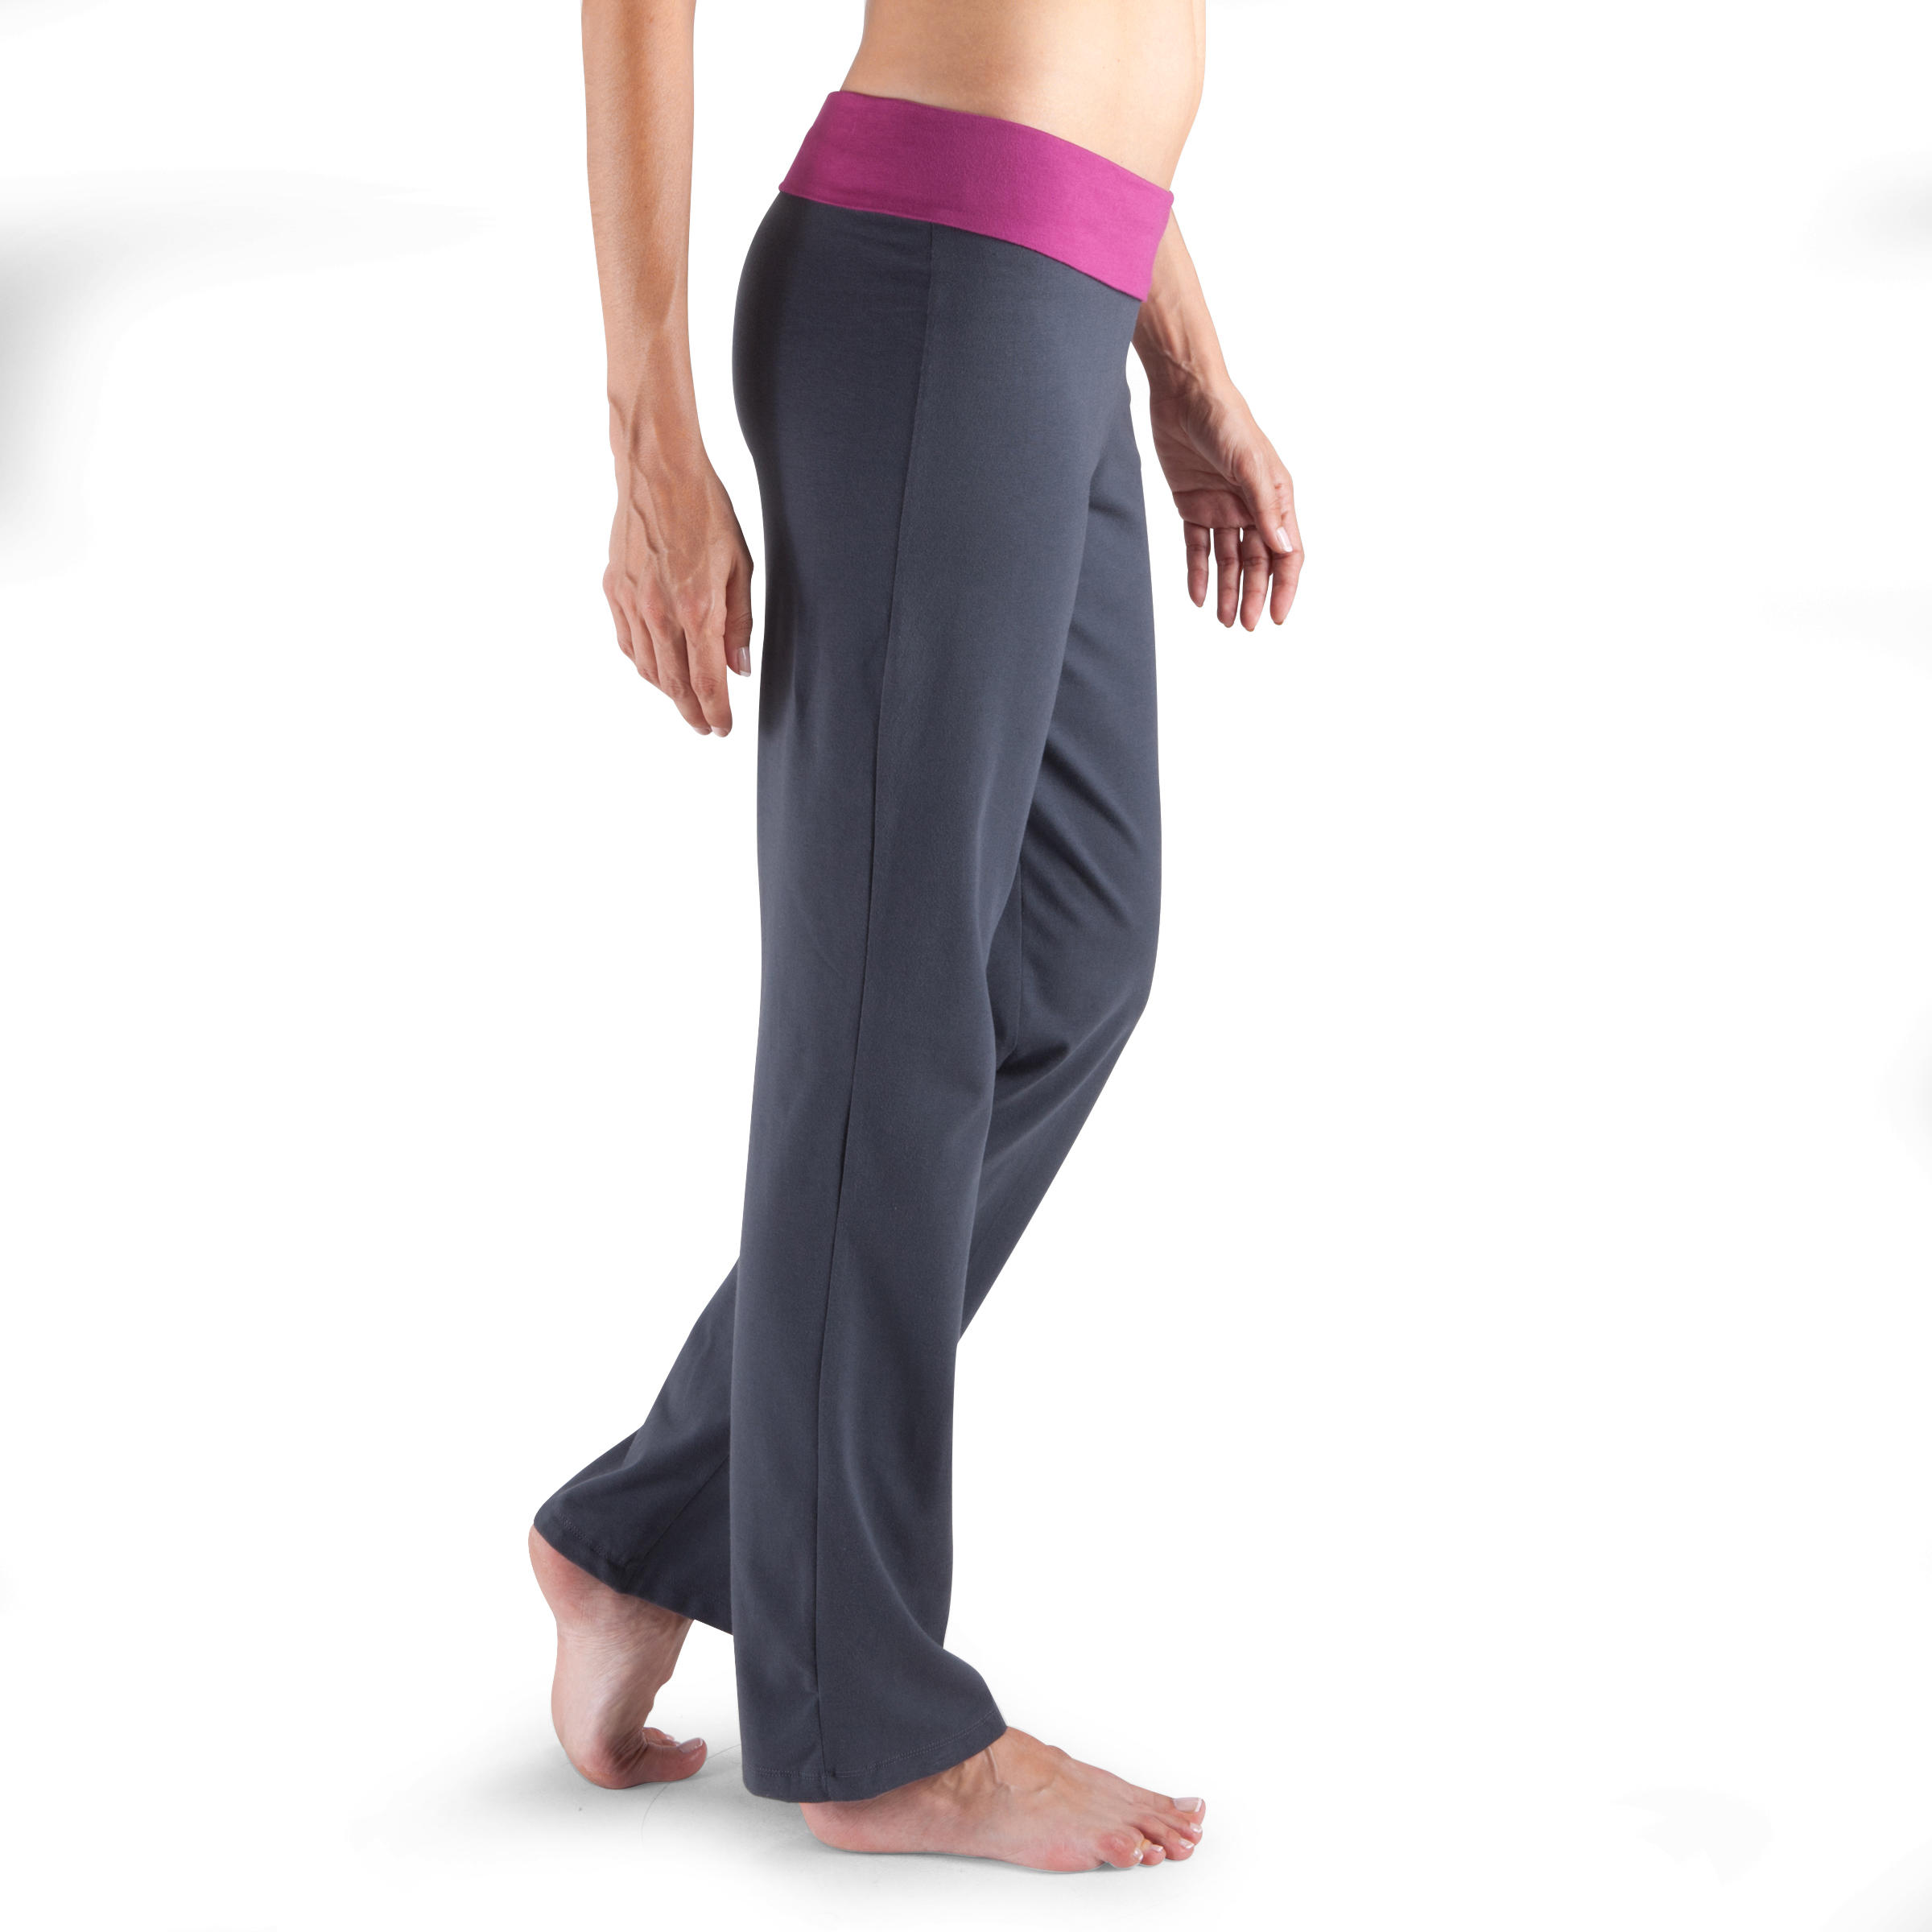 Women's Organic Cotton Gentle Yoga Bottoms - Dark Grey 9/11